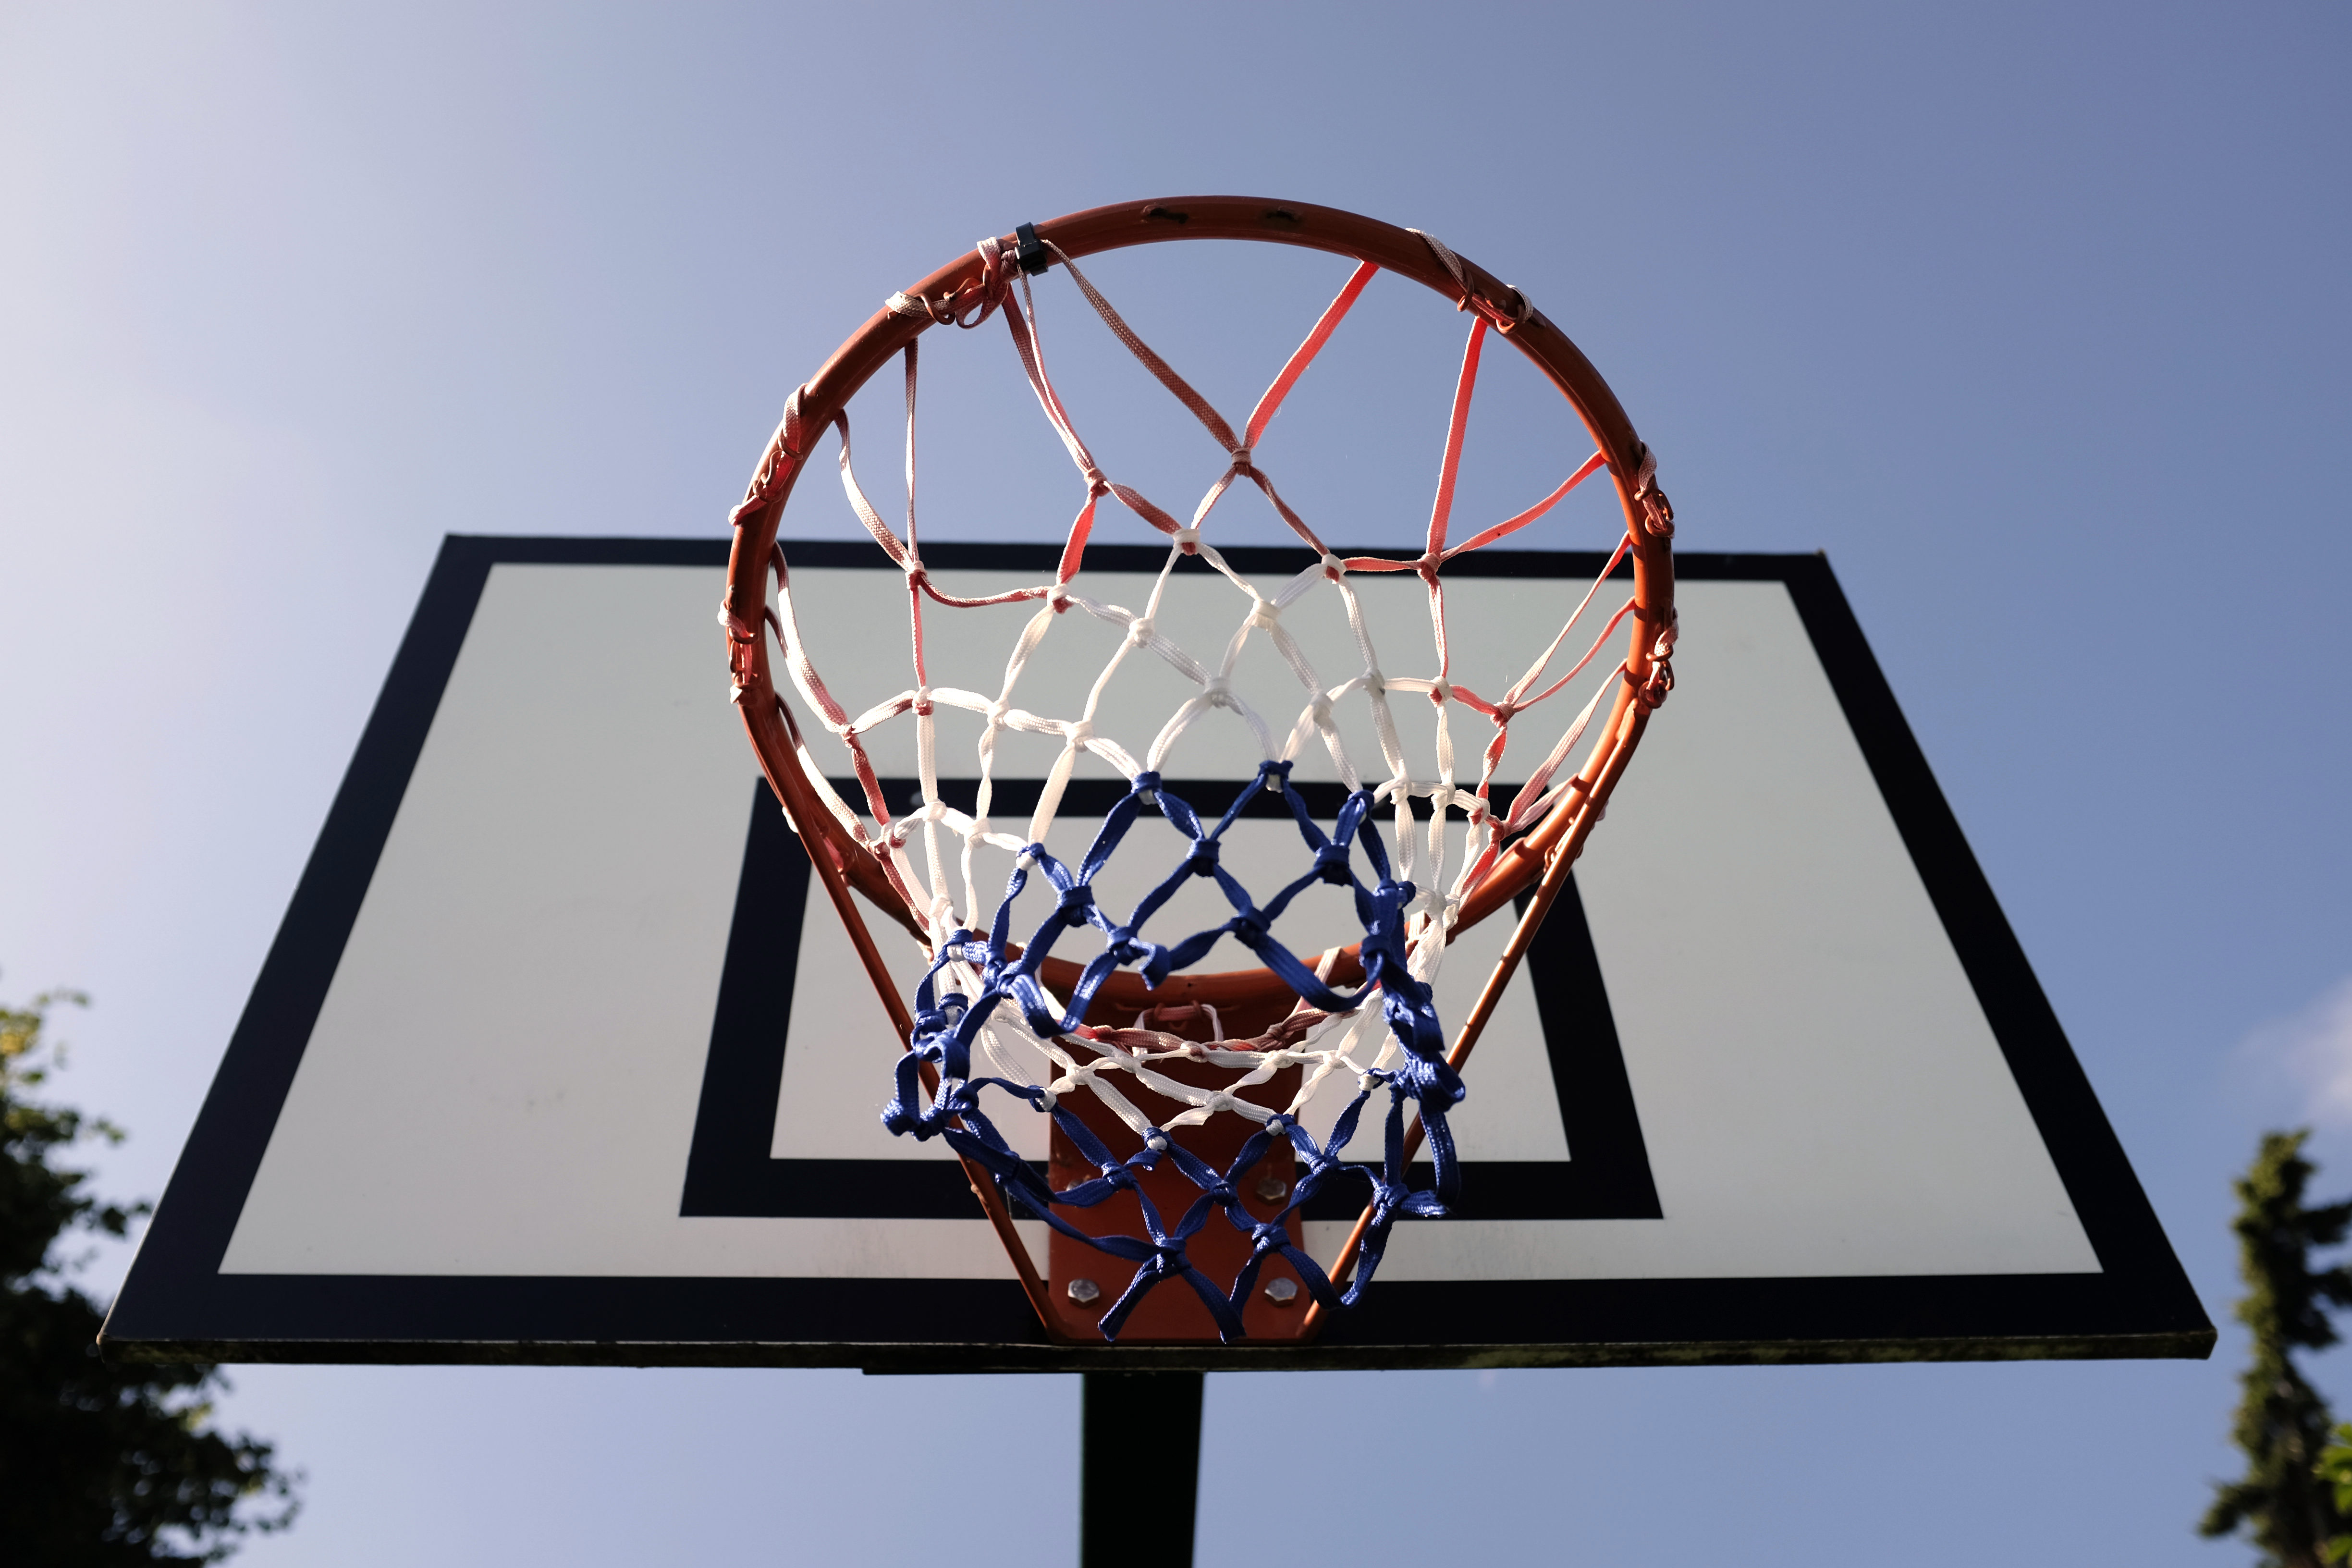 A basketball hoop and backboard